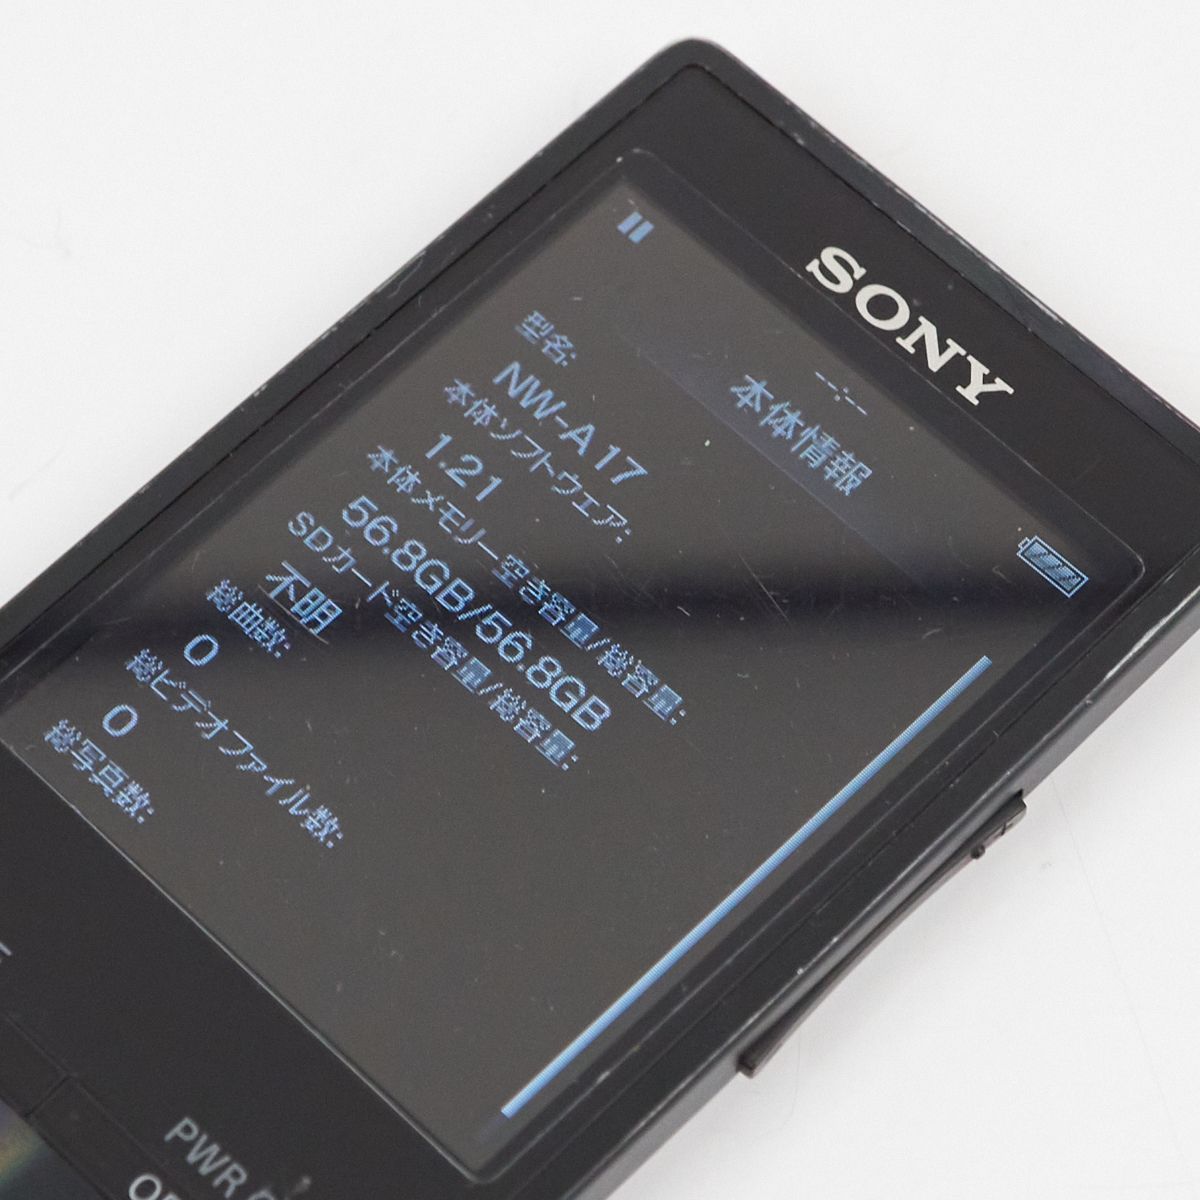 SONY WALKMAN ウォークマン NW-A17 64GB USED品 本体のみ ブラック ...